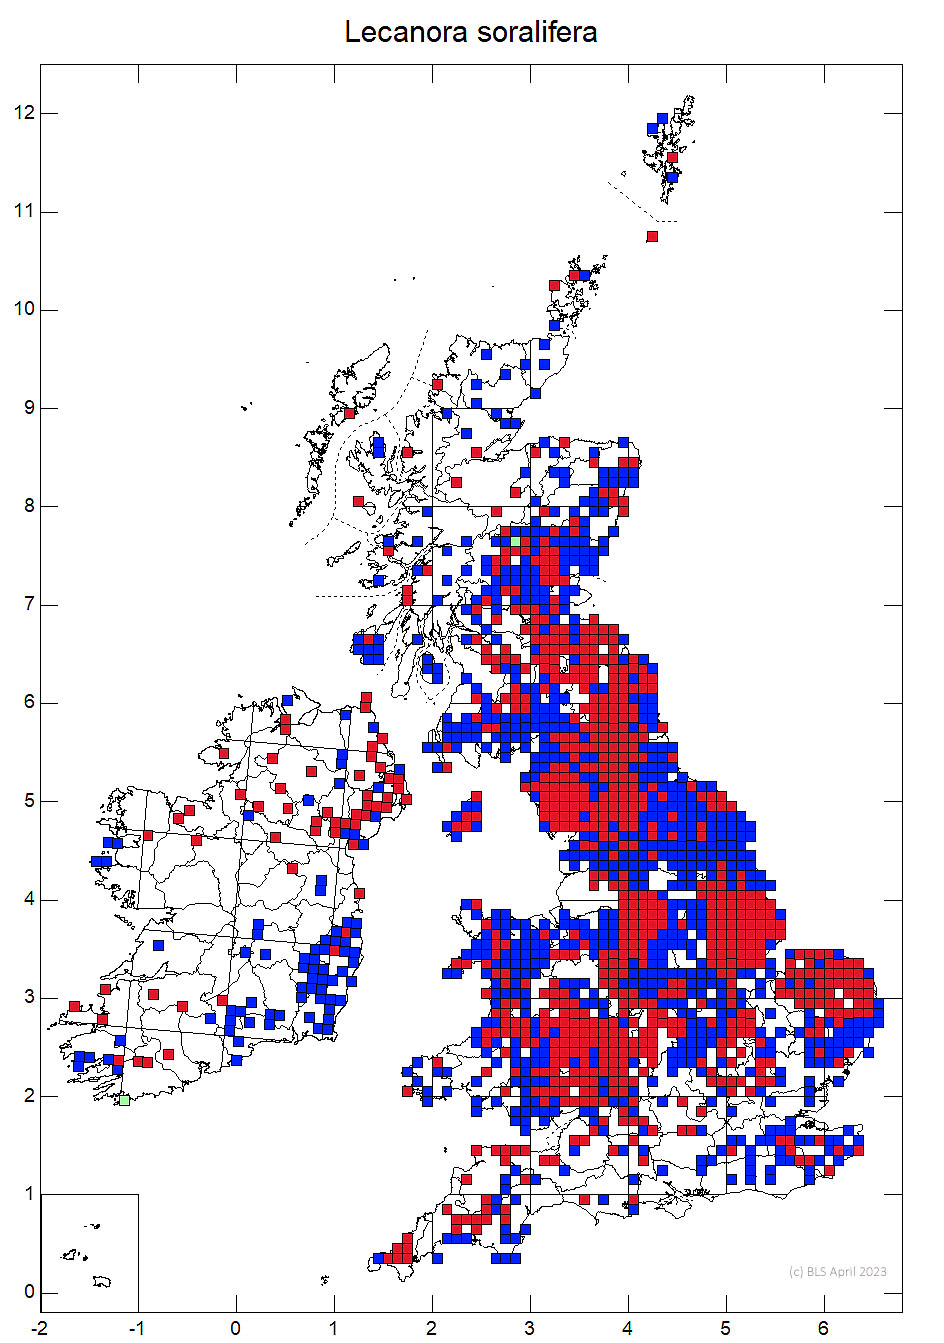 Lecanora soralifera 10km sq distribution map